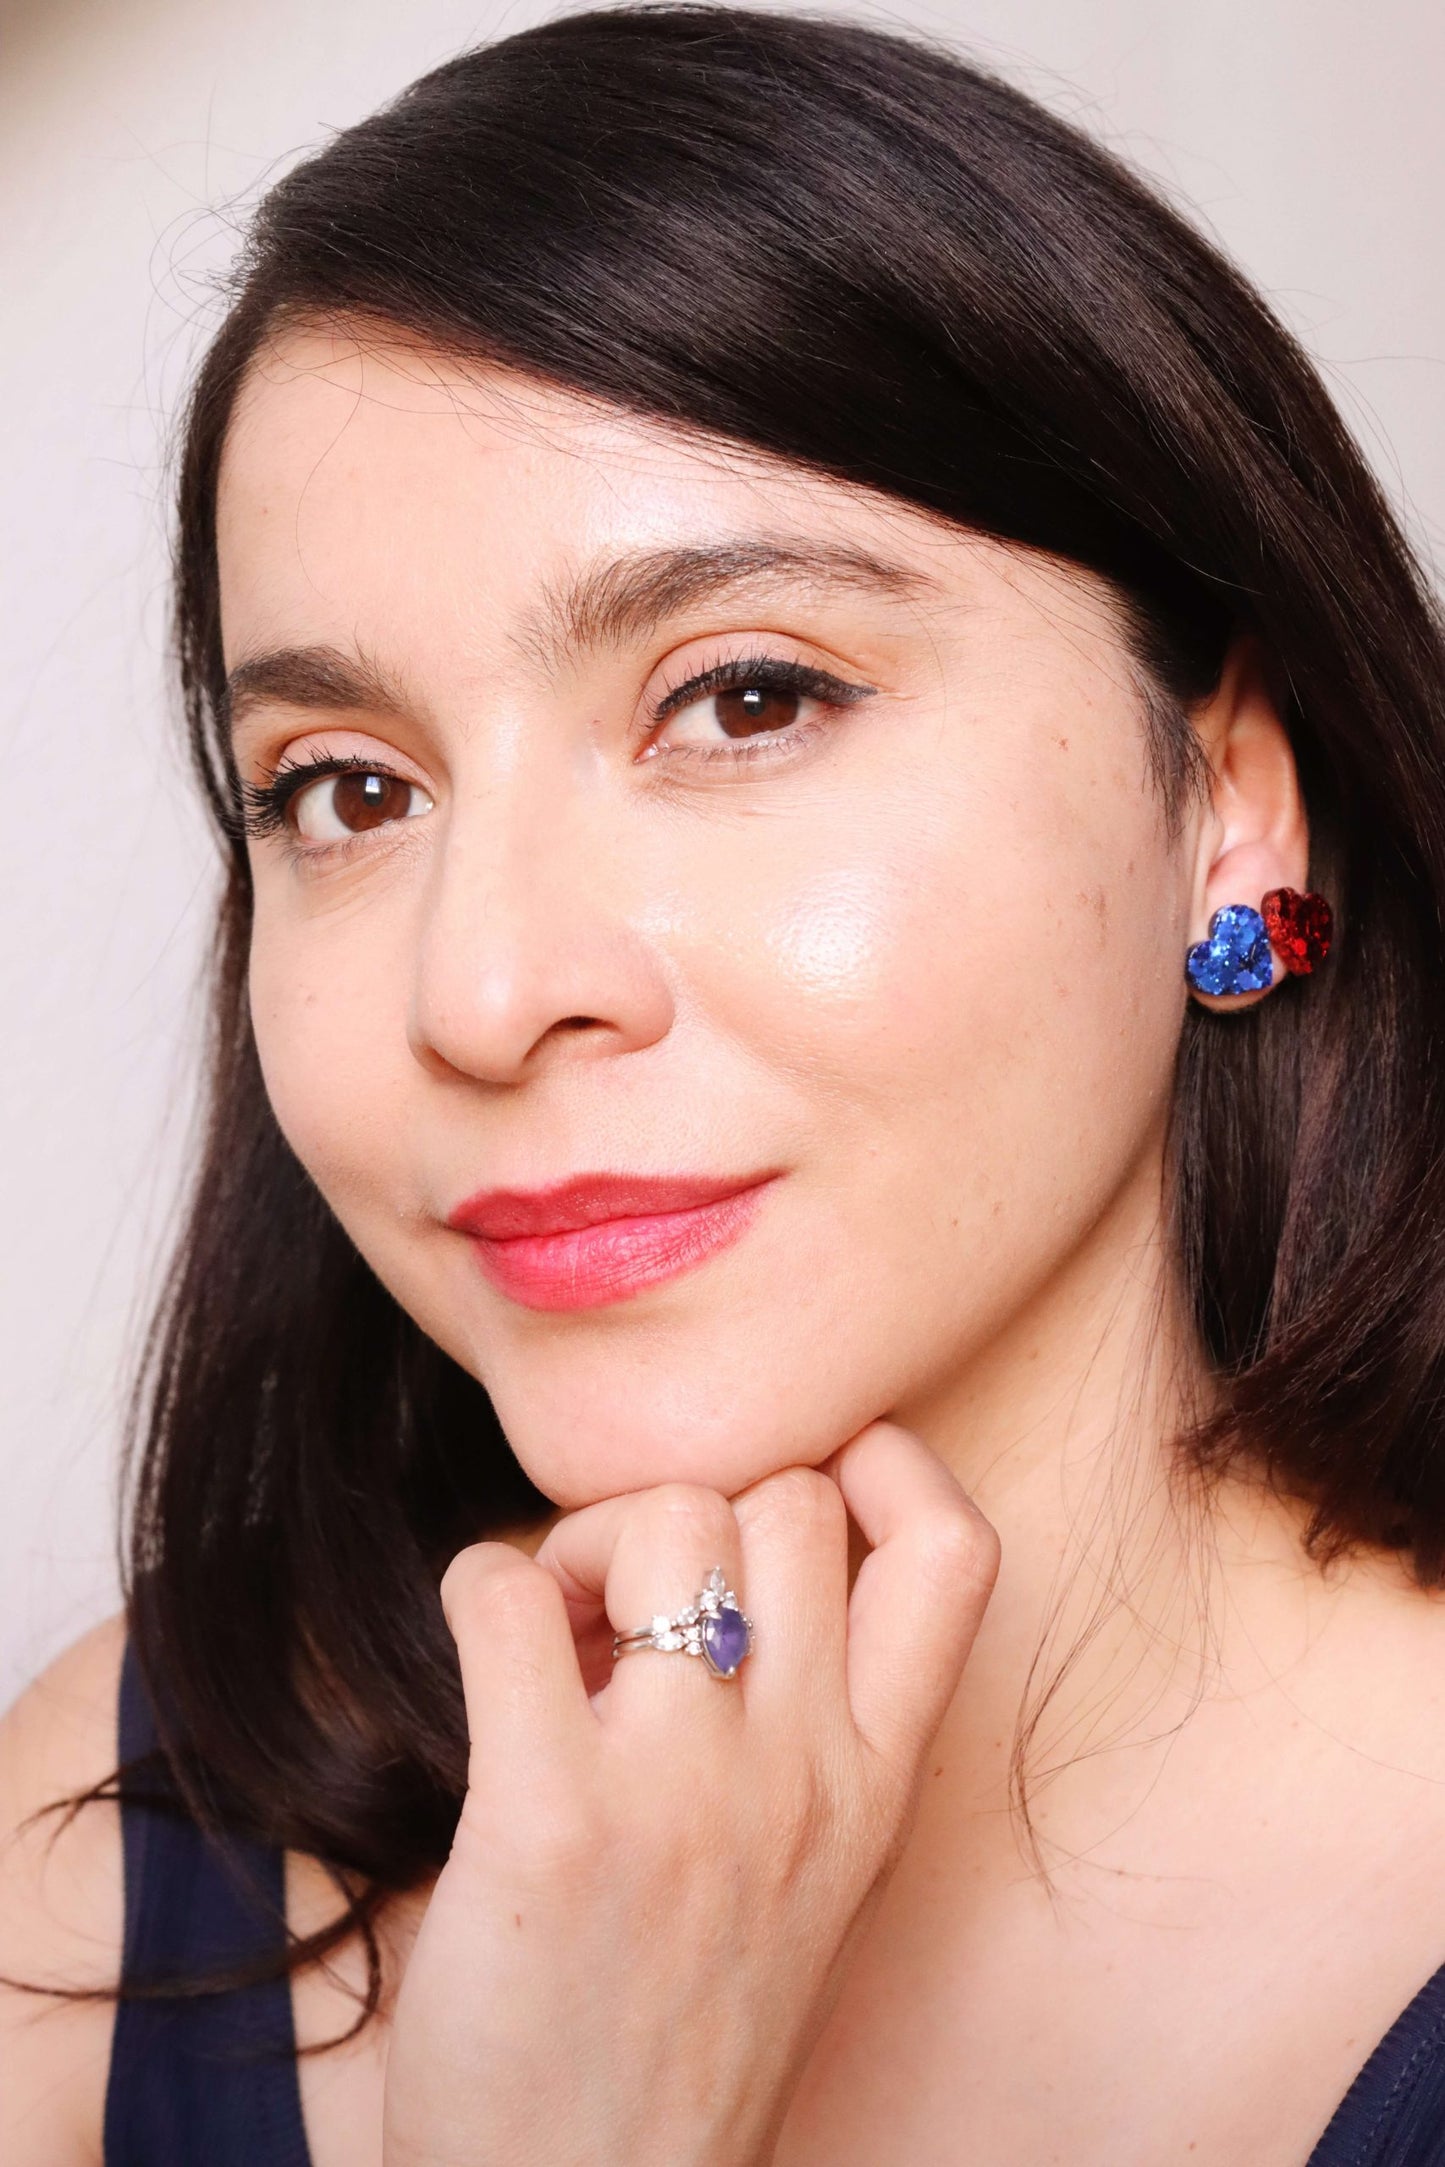 patriotic-heart-stud-earrings---glittery-patriotic-stud-earrings---red-white-and-blue-earrings---kaleidoscopes-and-polka-dots